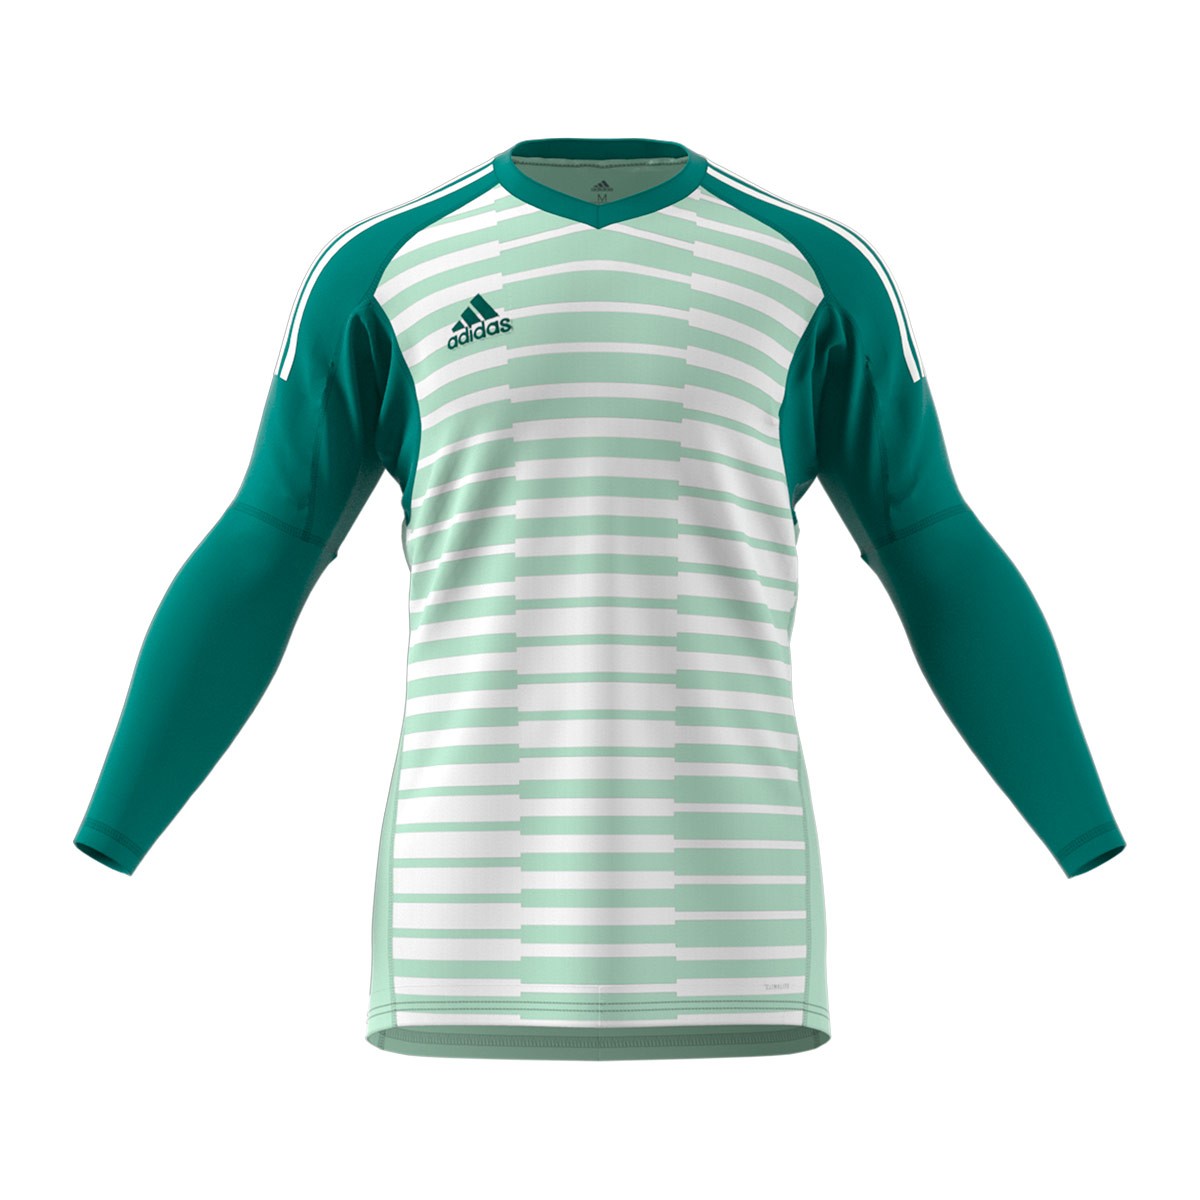 Jersey adidas AdiPro 18 Goalkeeper Longsleeve Aero green-White - Football  store Fútbol Emotion